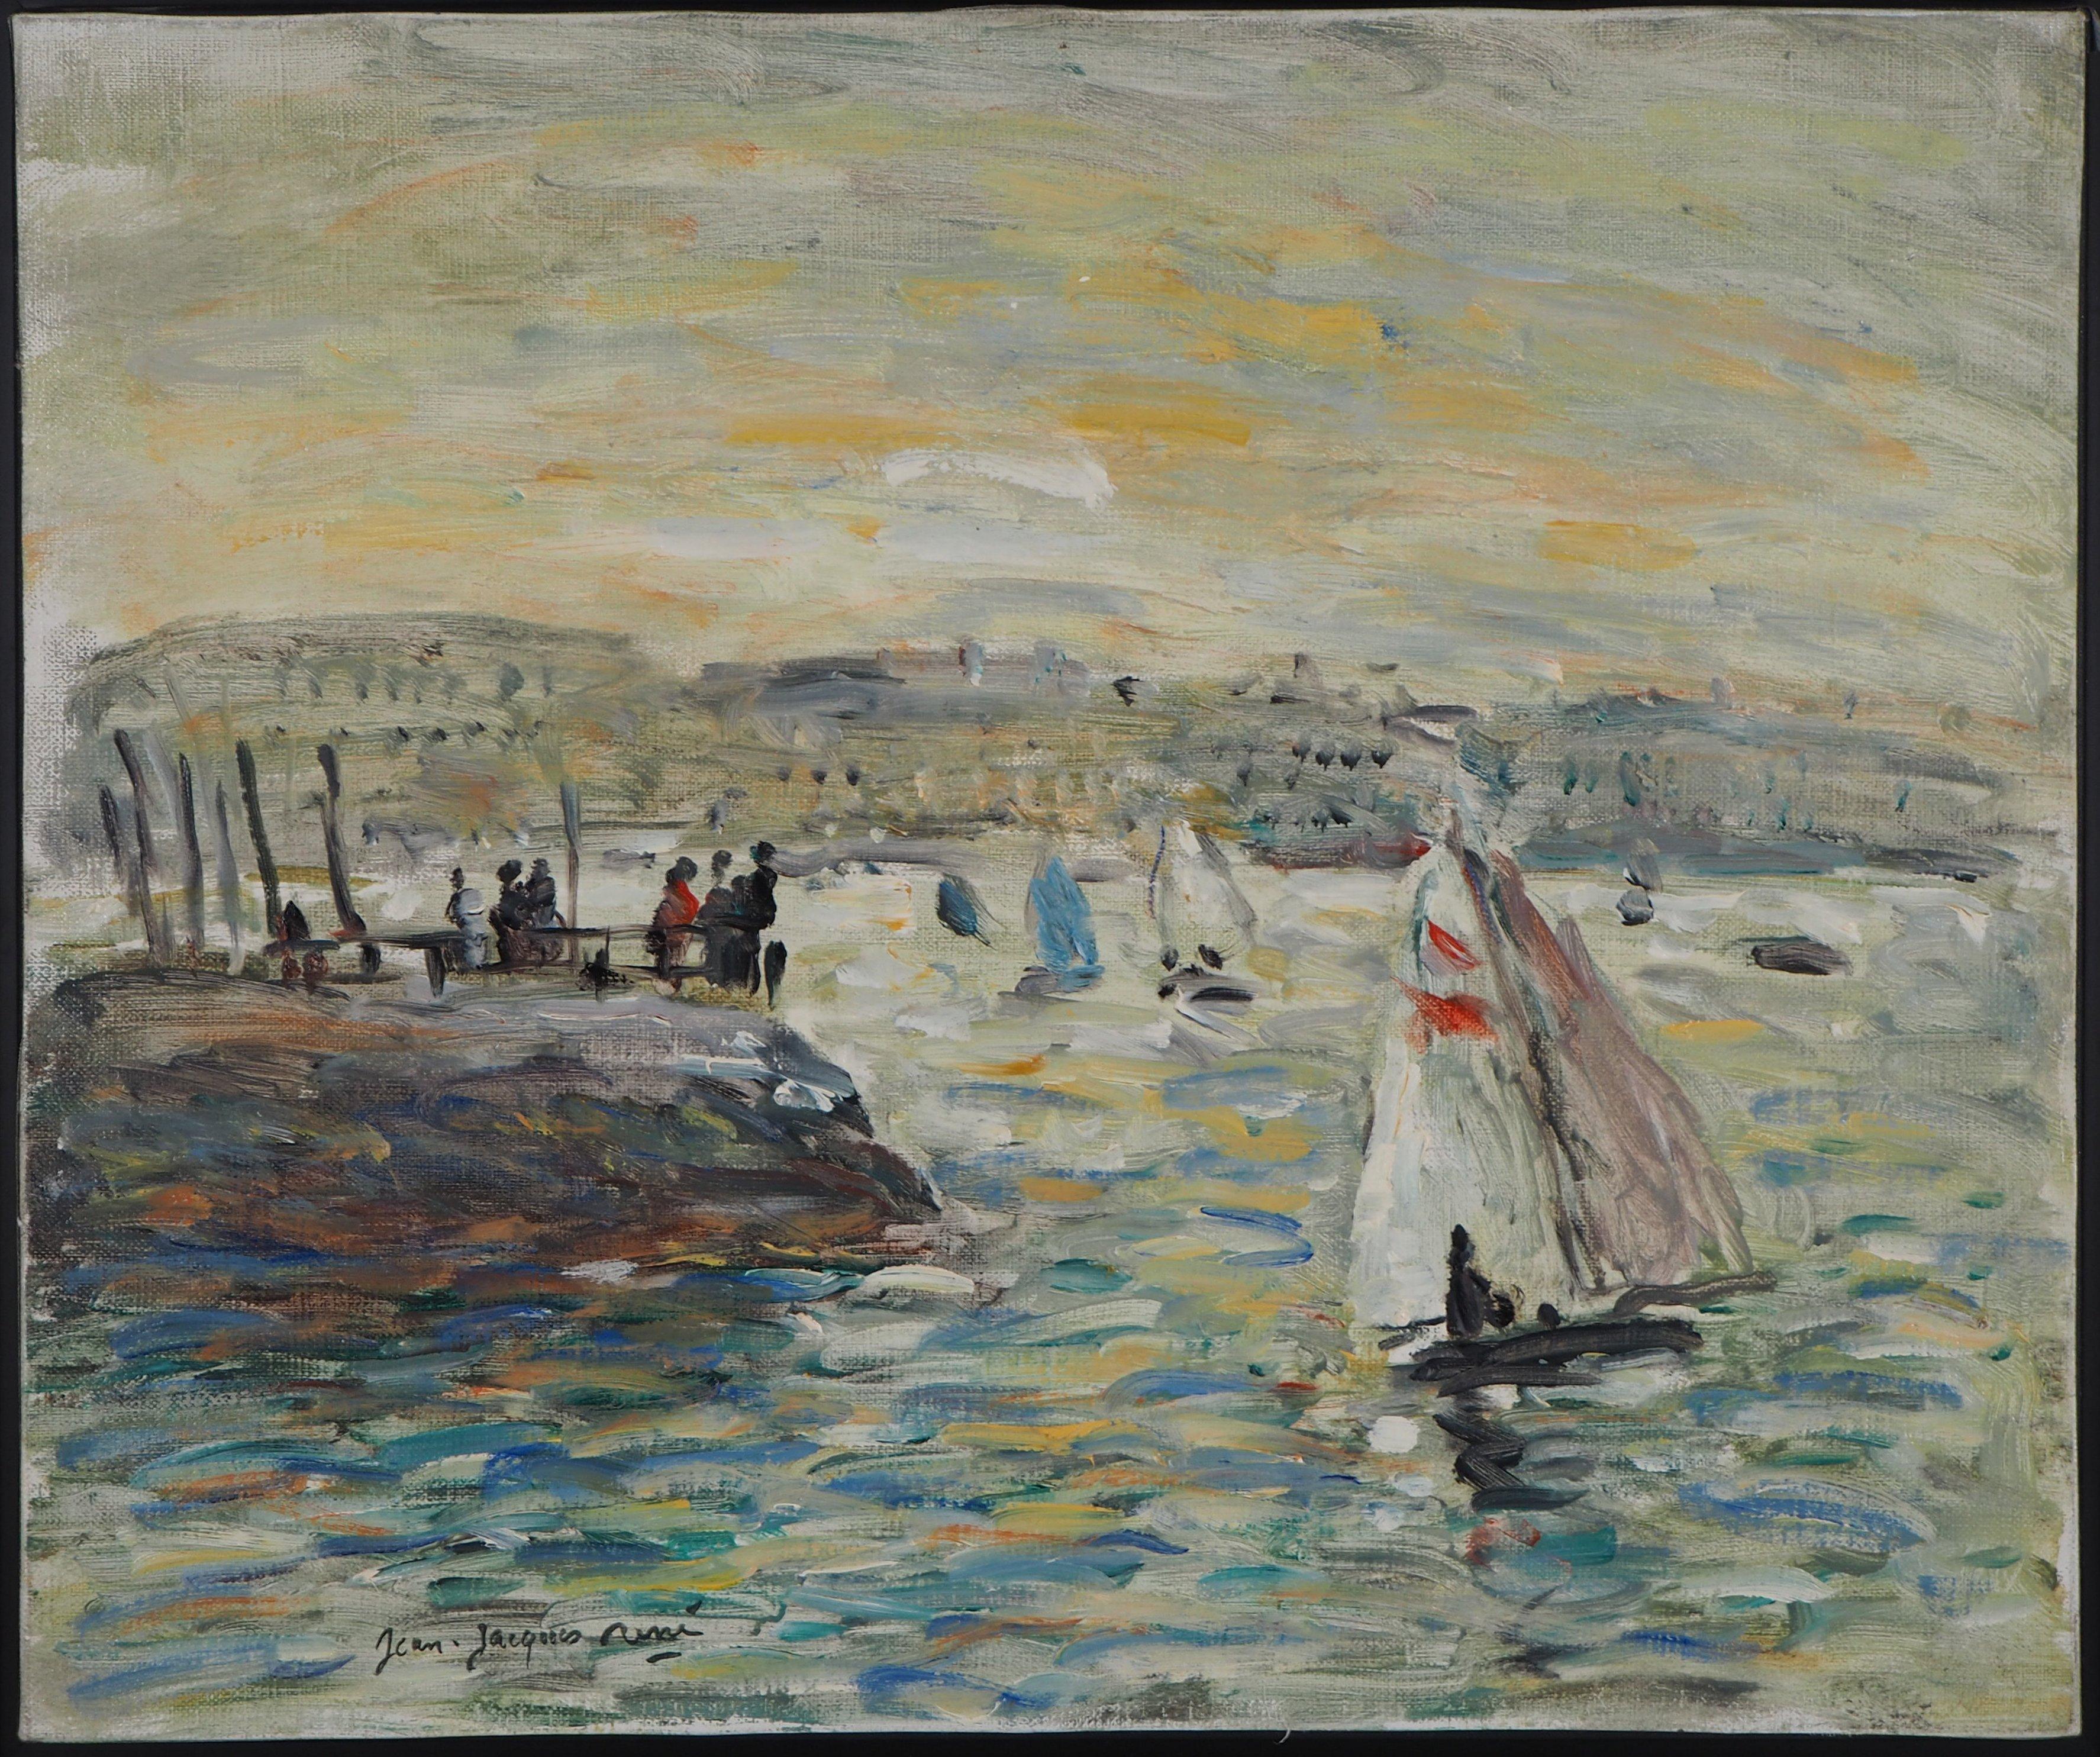 Landscape Painting Jean Jacques Rene - Sailings in Havre - Huile sur toile signée